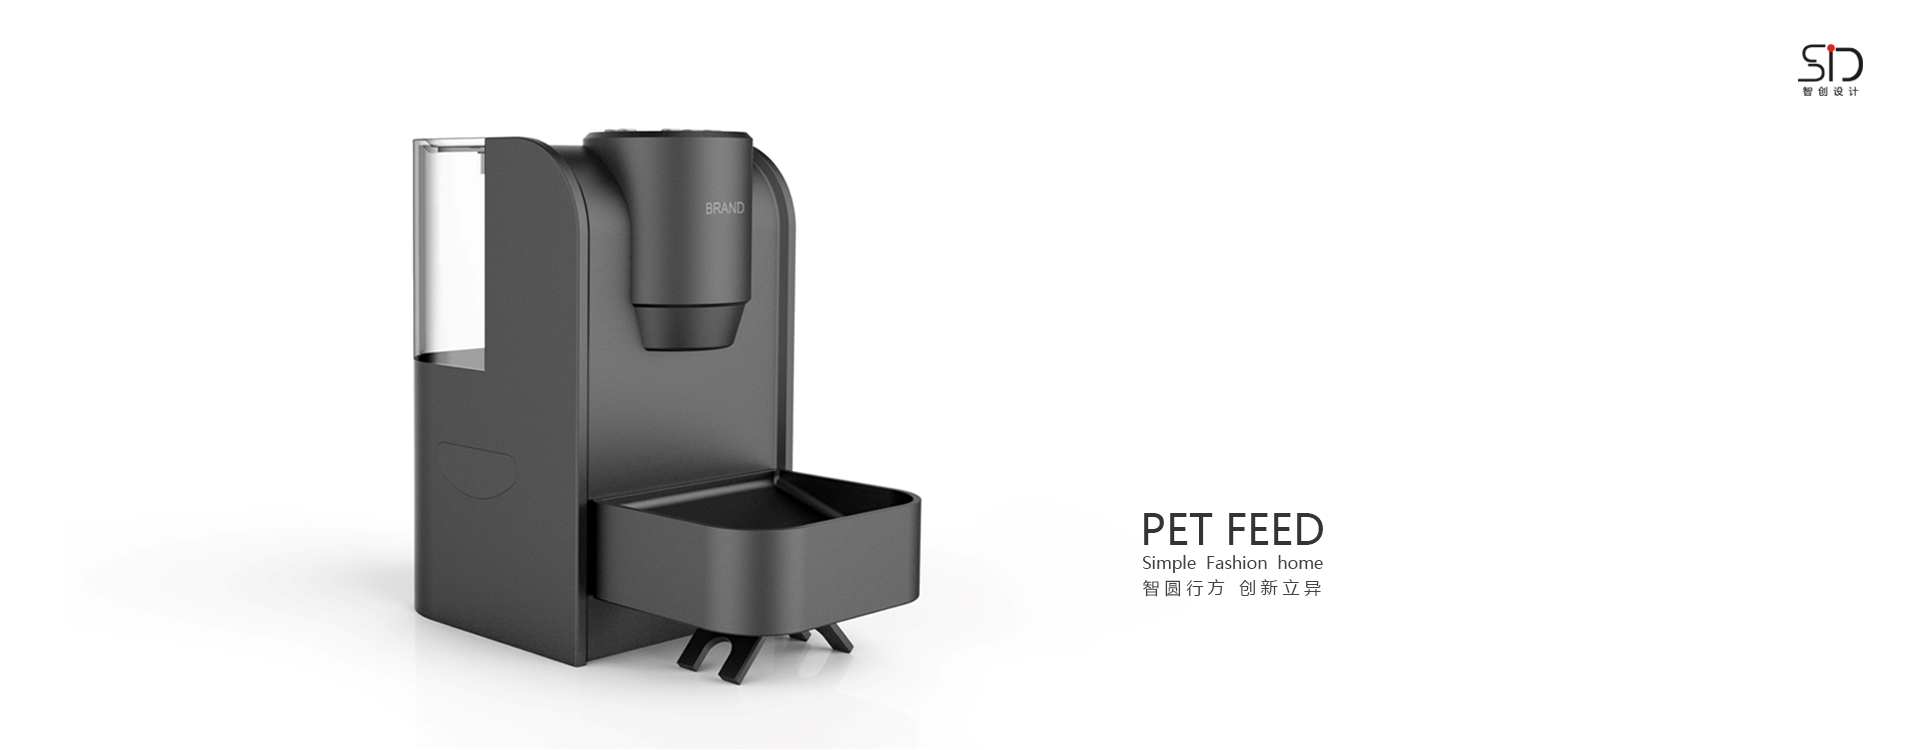 Pet Feeder 工业设计